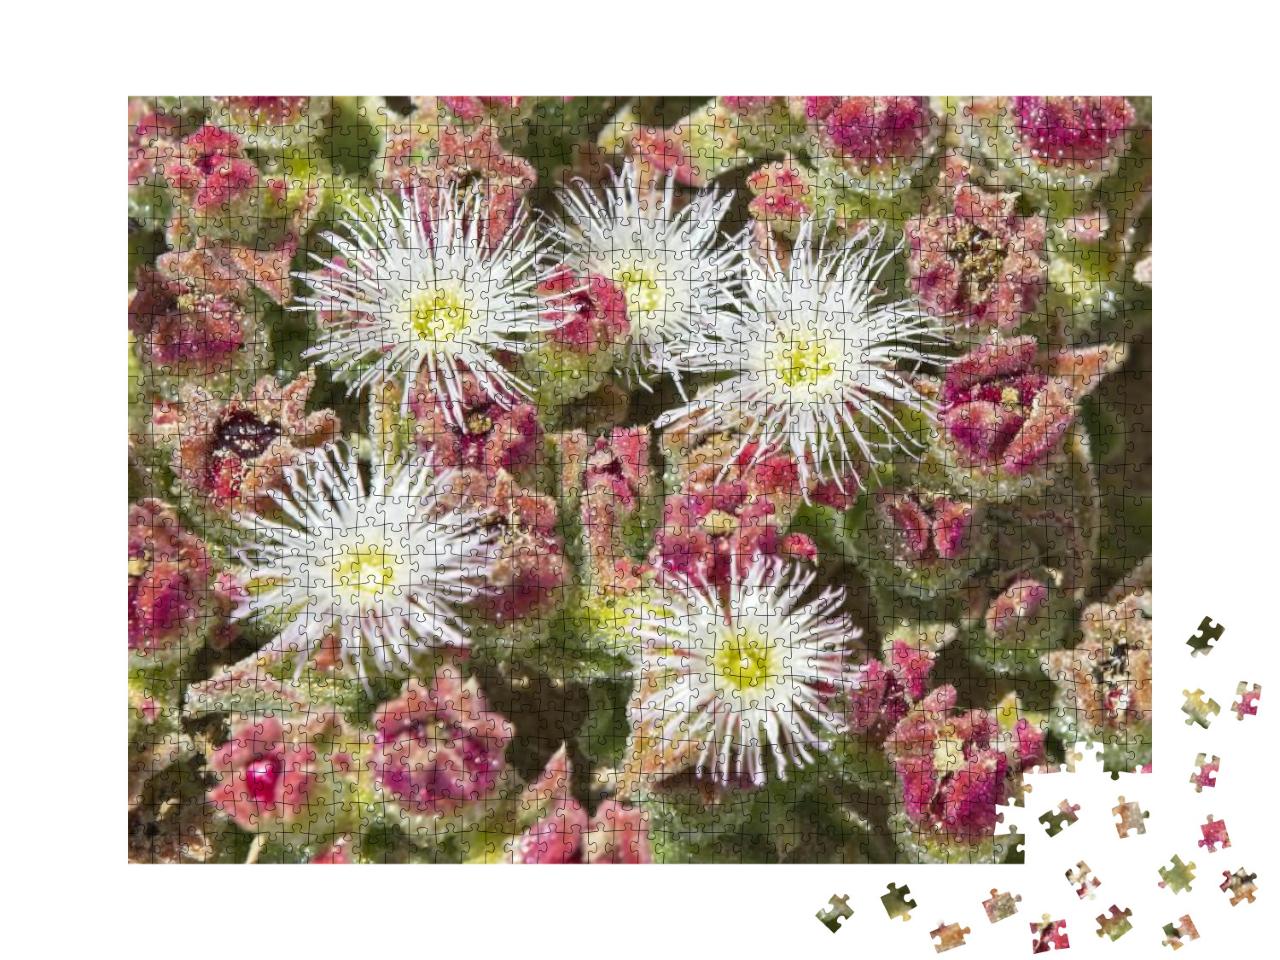 Mesembryanthemum Crystallinum Crystalline Ice Plant Growi... Jigsaw Puzzle with 1000 pieces